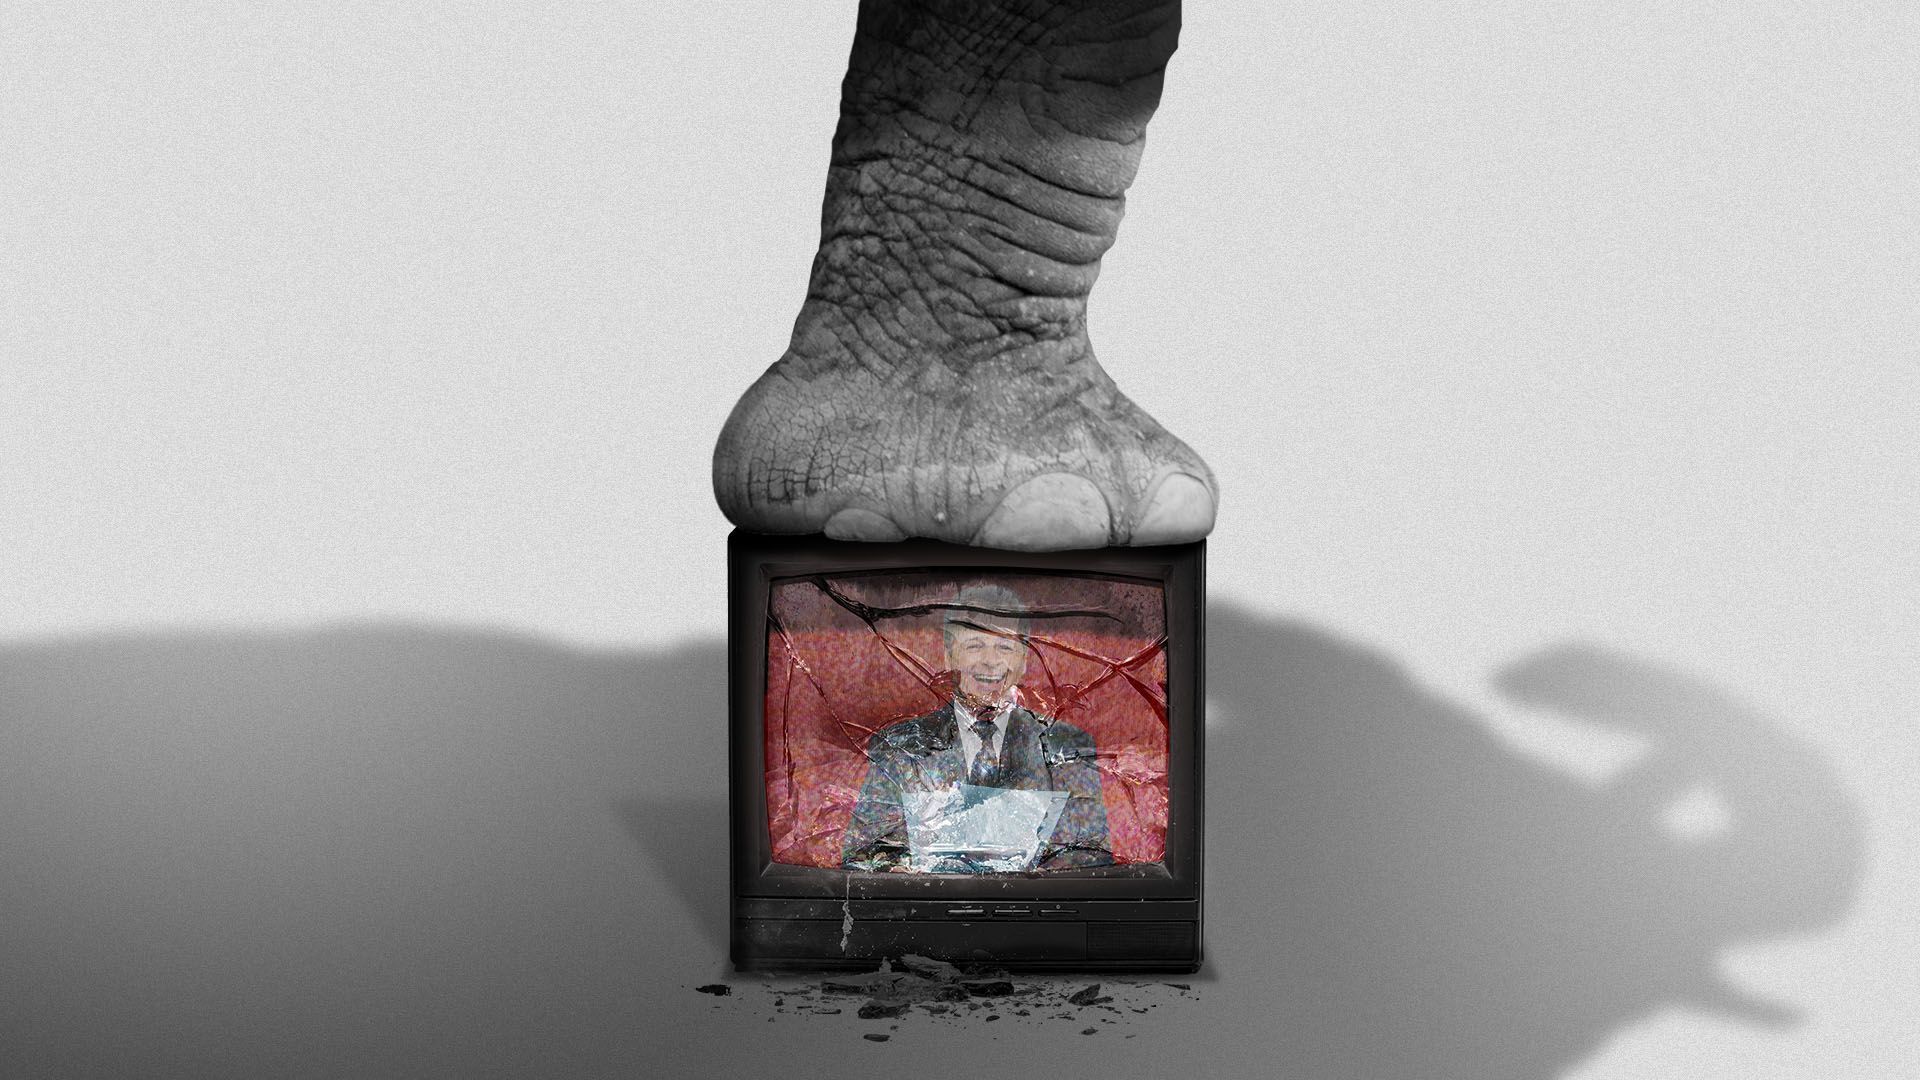 Elephant stomping on TV of Reagan